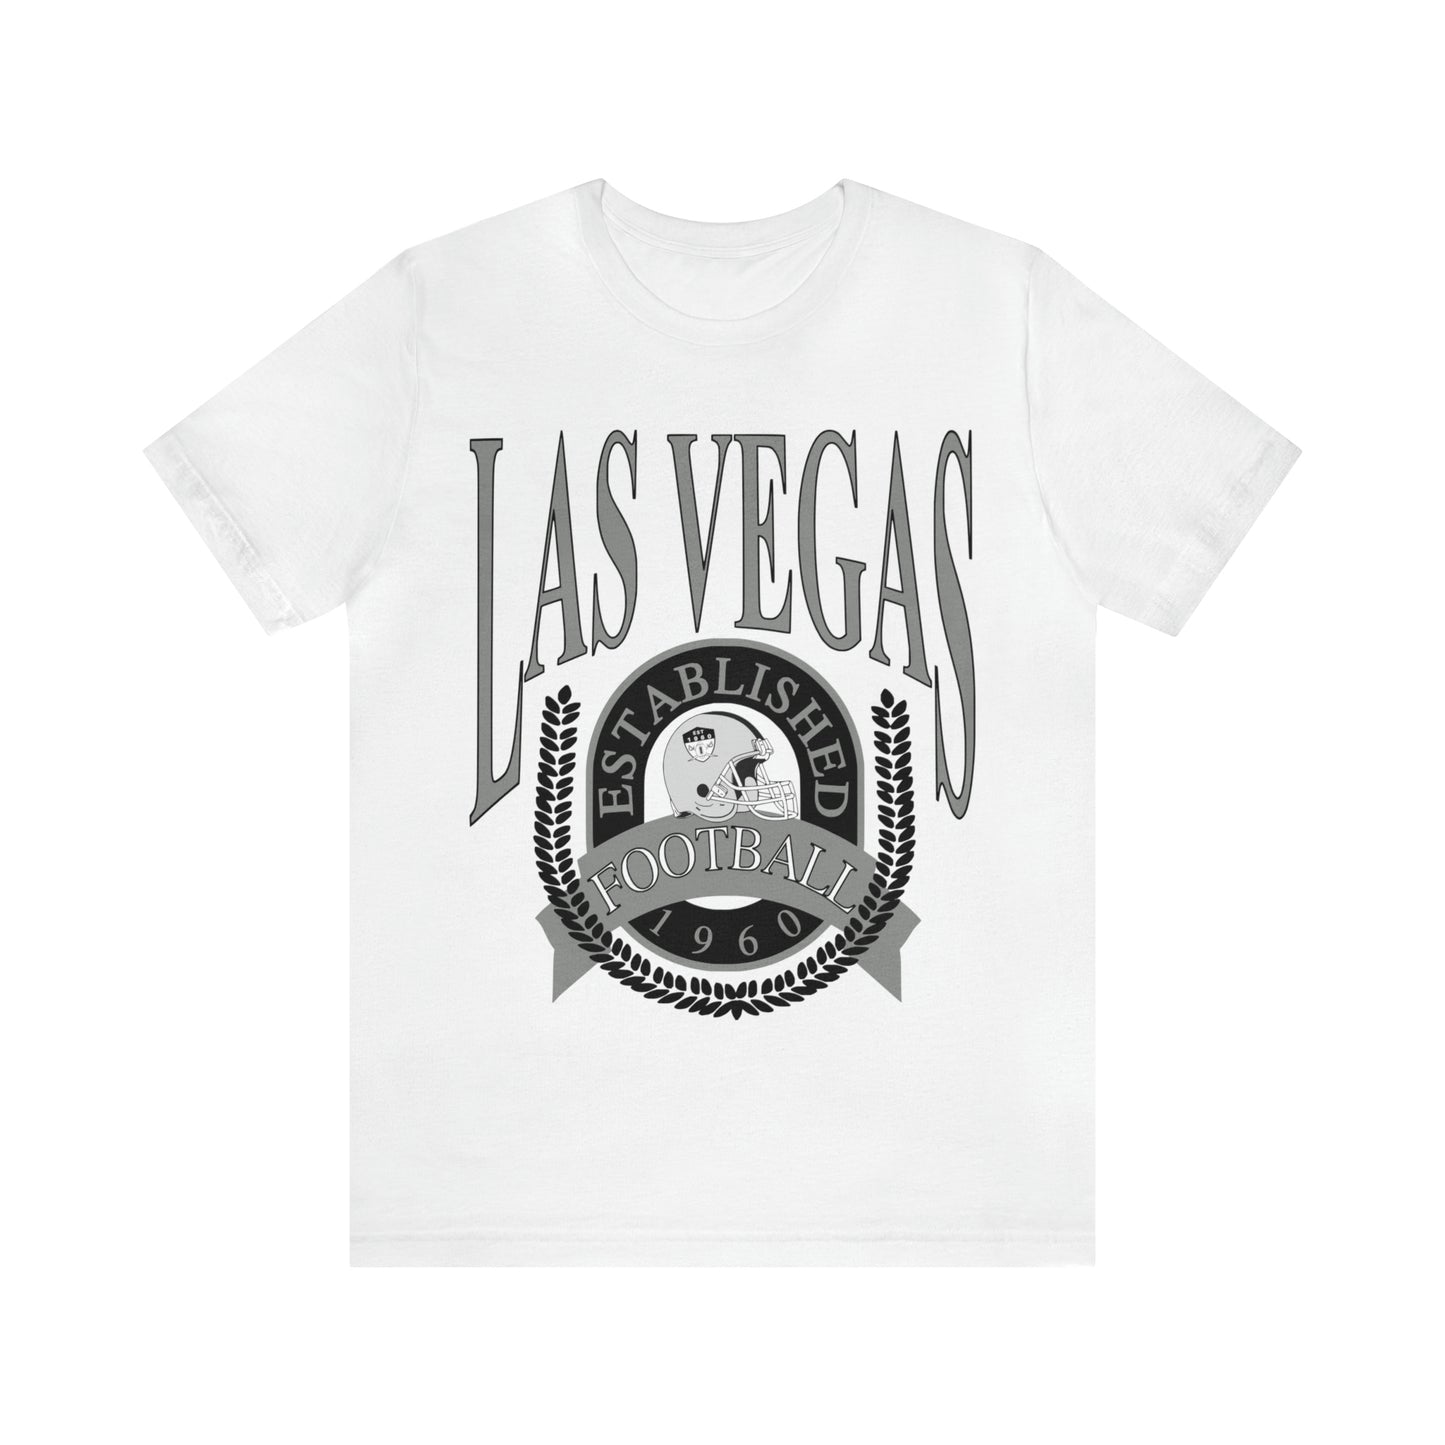 Vintage Las Vegas Raiders T-Shirt - Vintage Style Football Short Sleeve Tee - Men's & Women's Football Apparel - Design 1